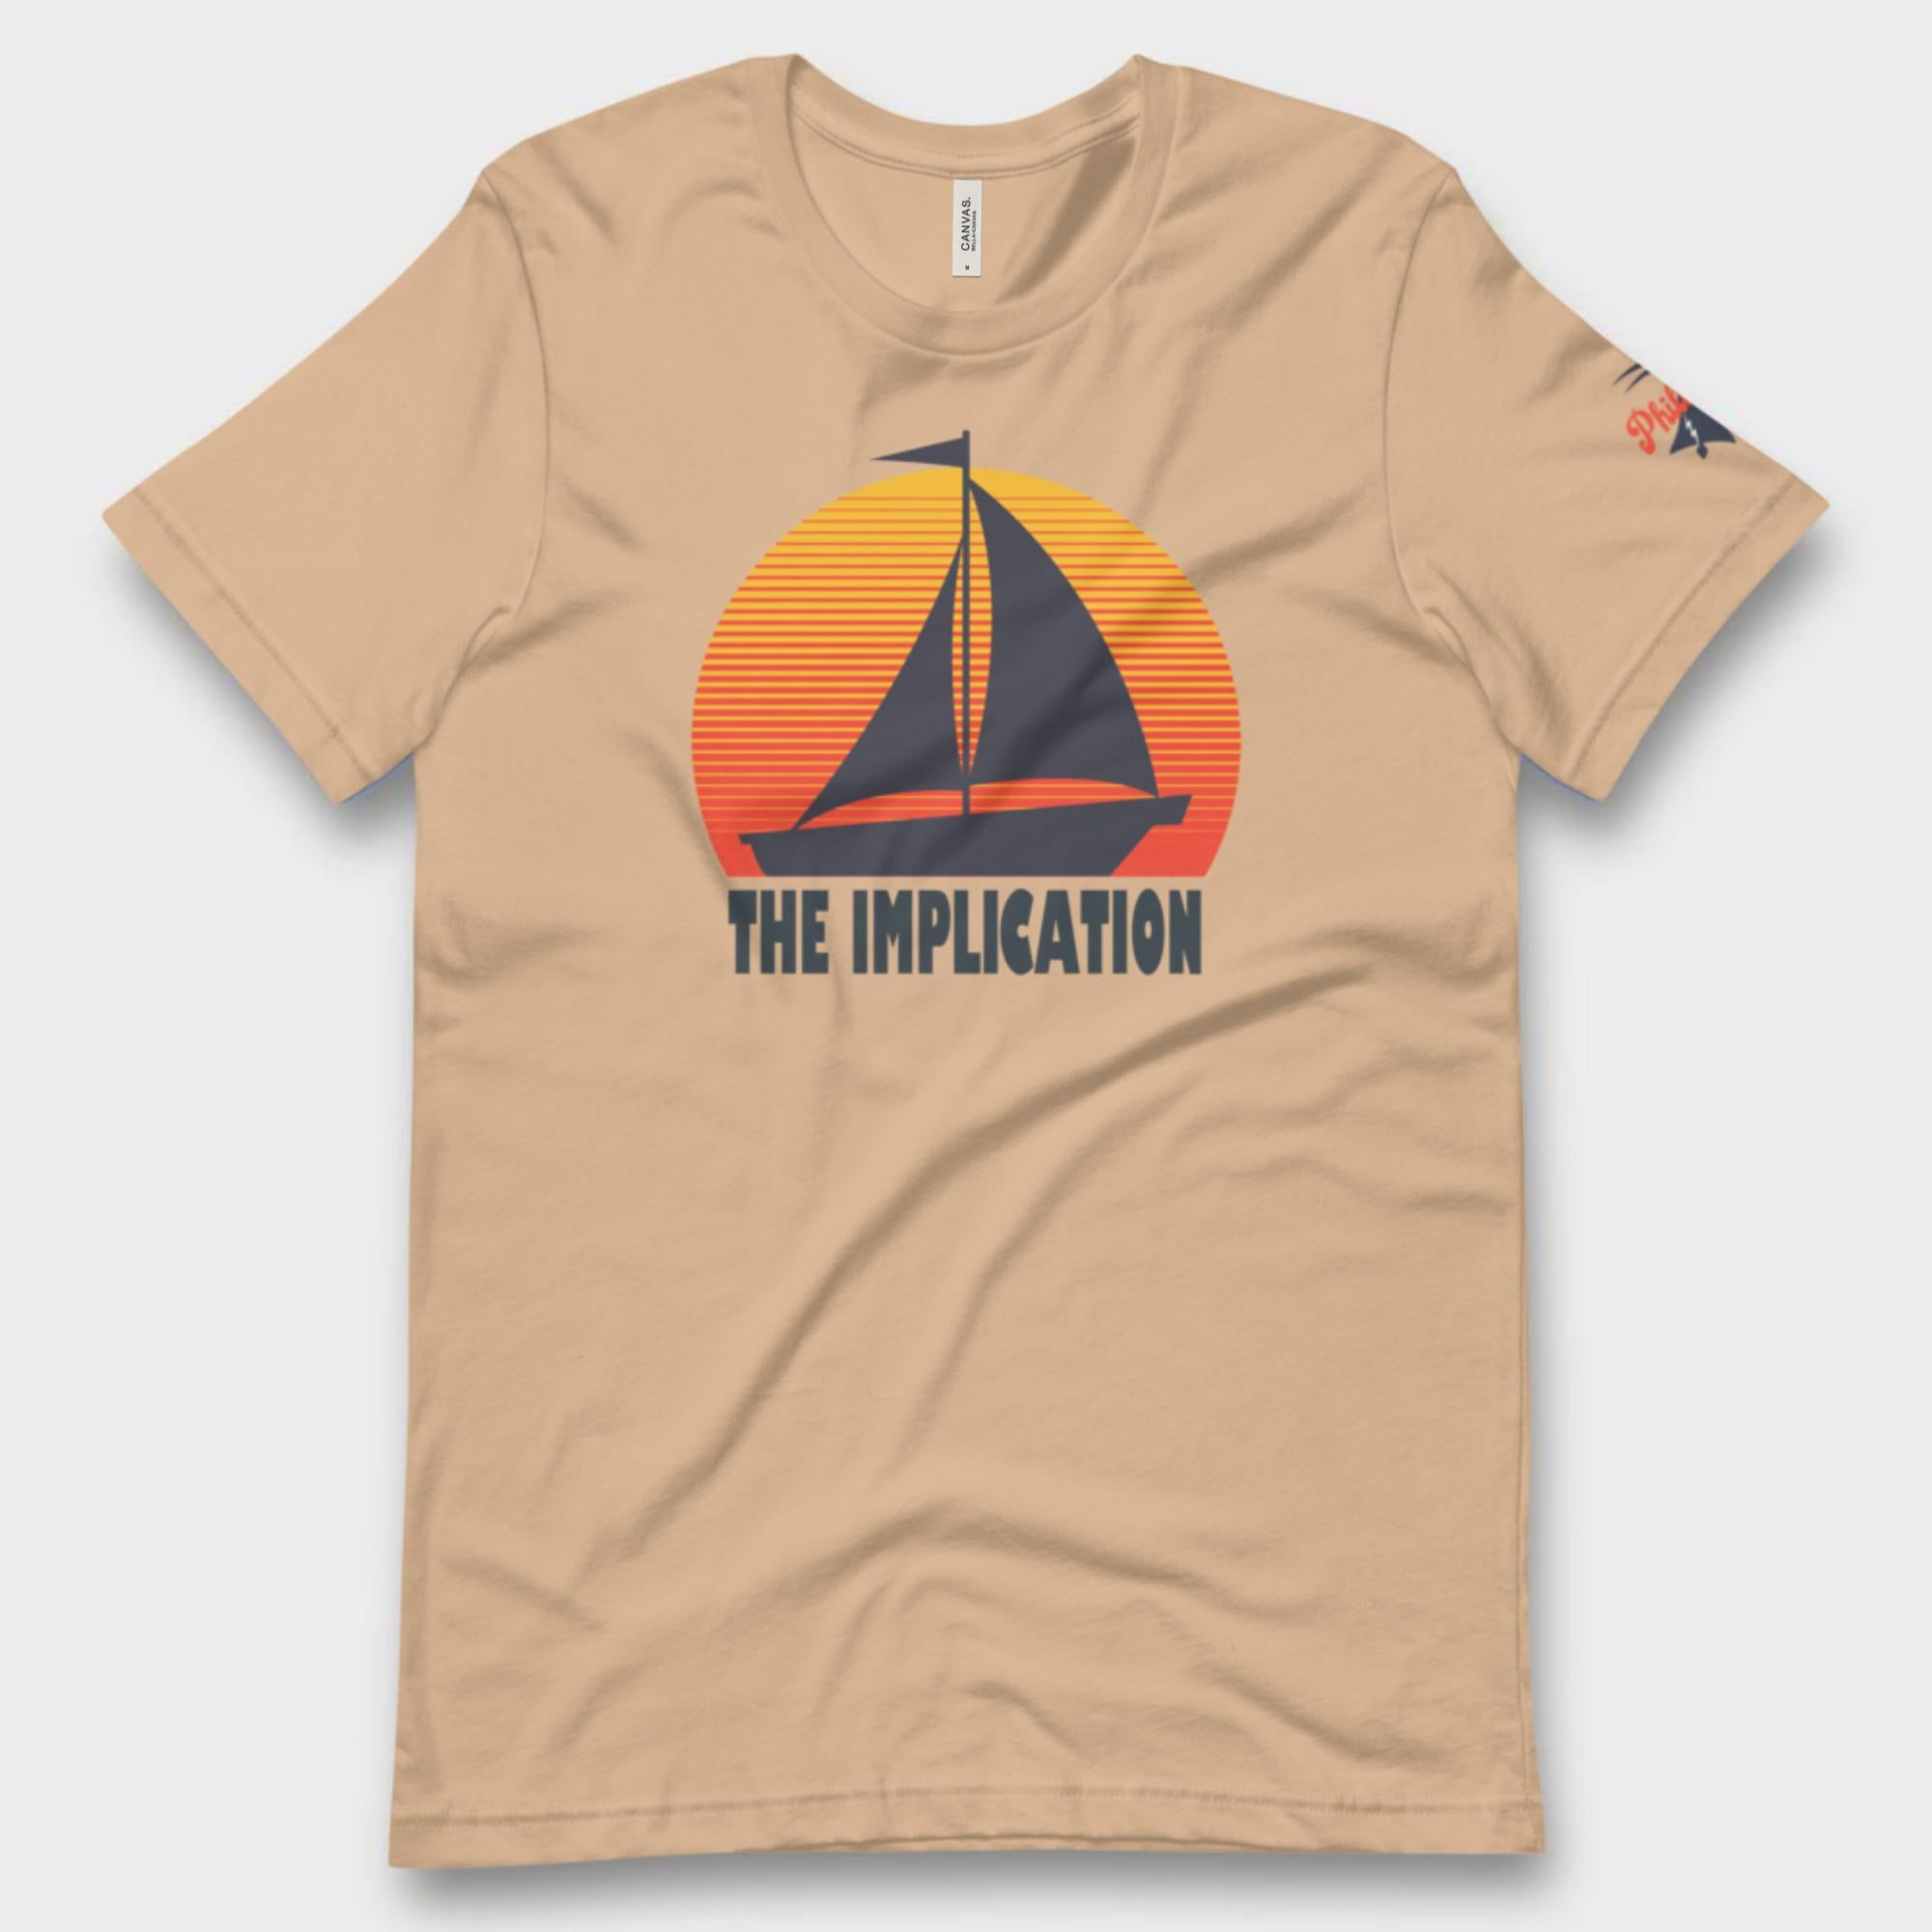 "The Implication" Tee